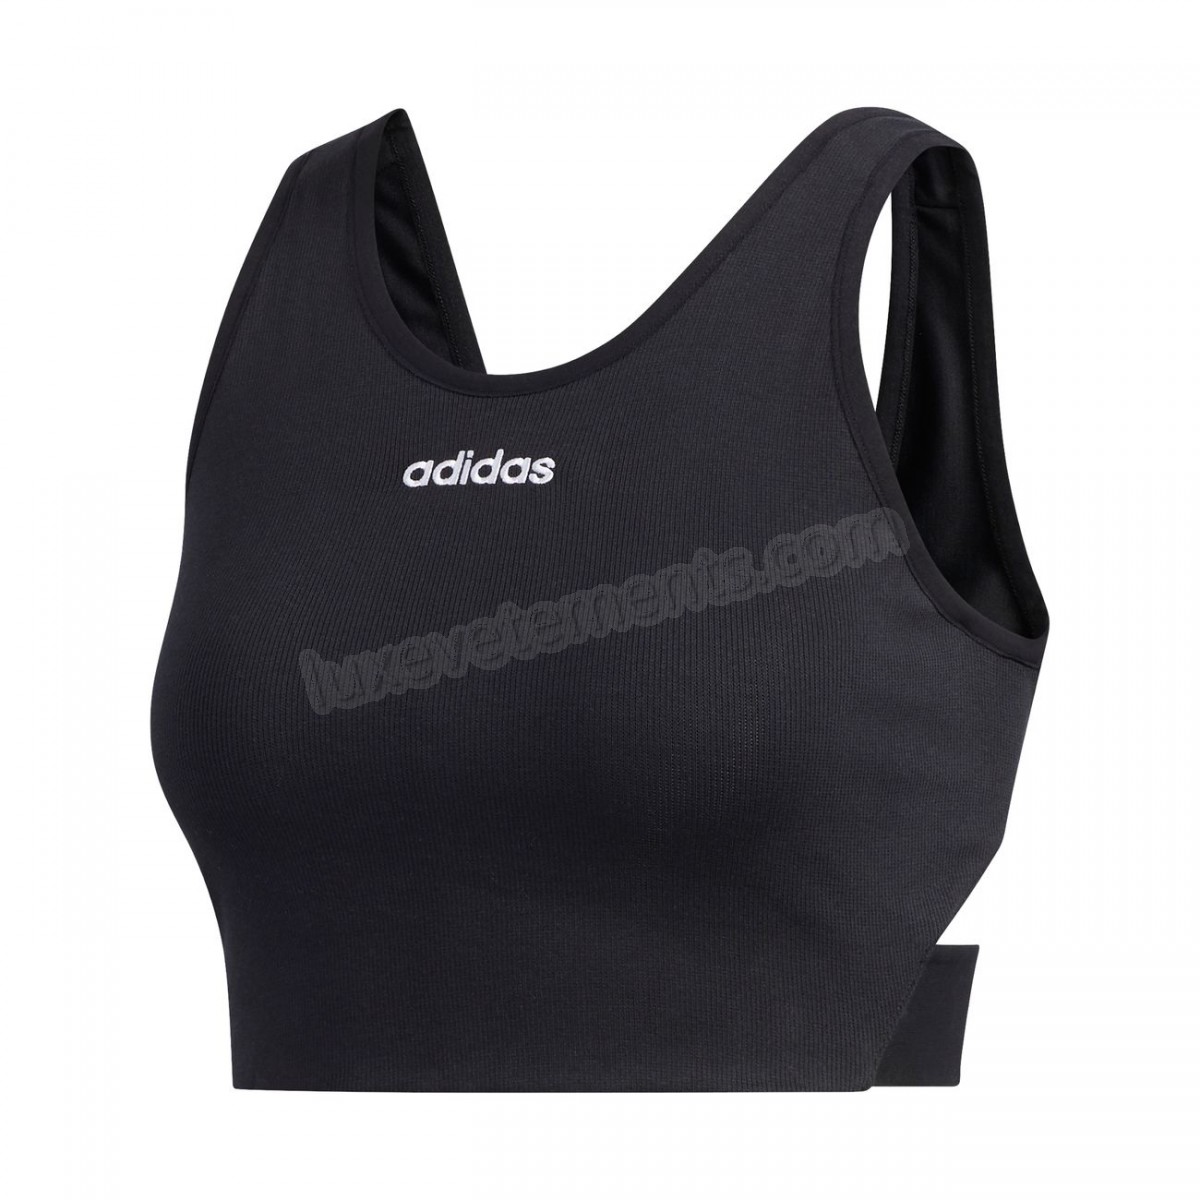 Adidas-Fitness femme ADIDAS Brassière adidas Core Training Vente en ligne - -8